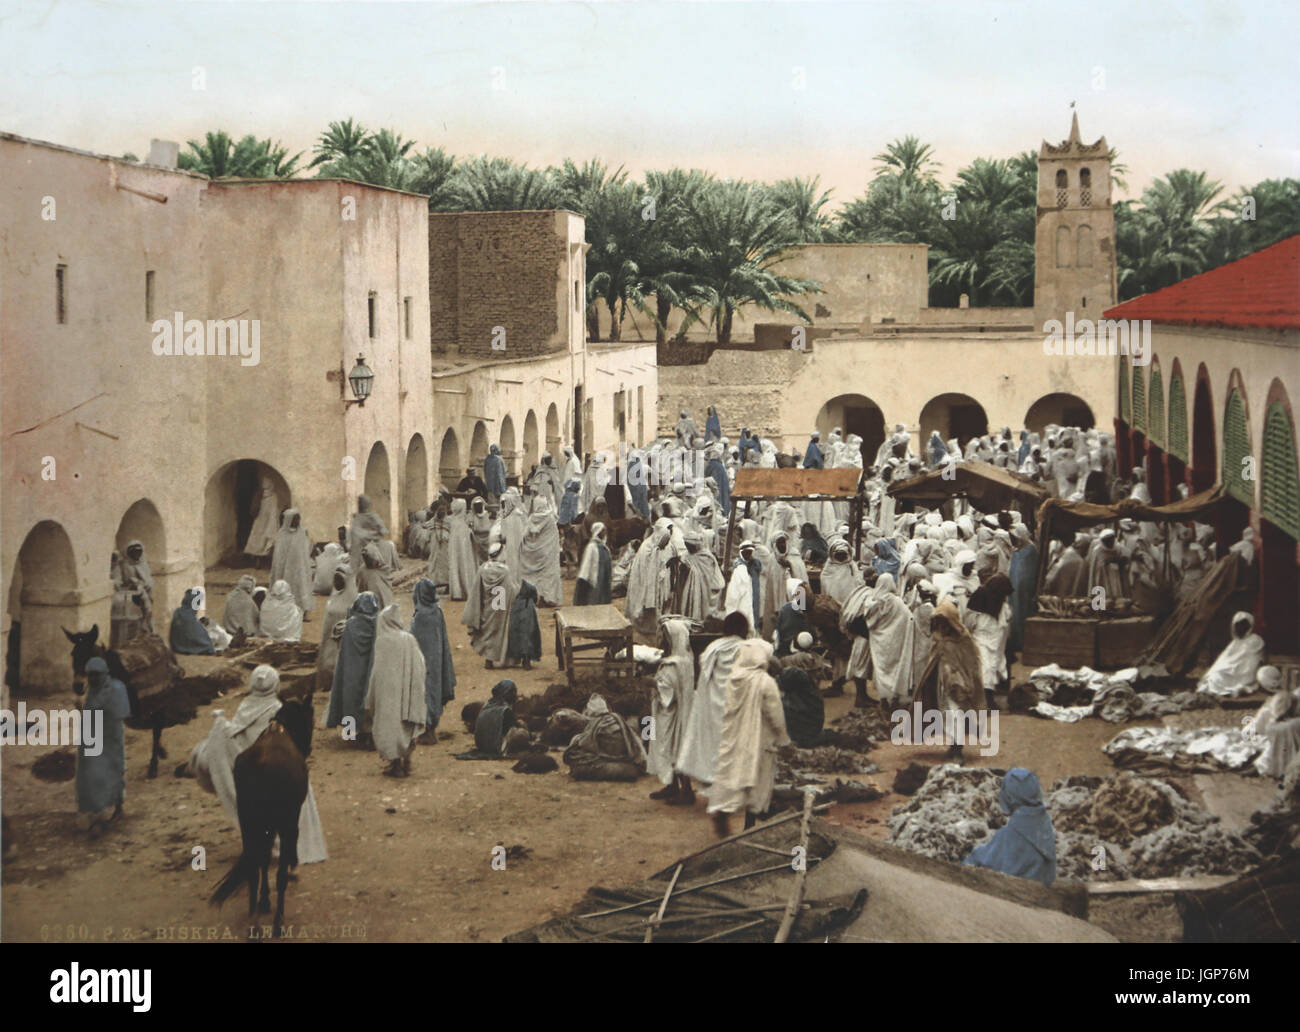 View of Biskra market in Biskra, Algeria. Circa 1899. Photochrome print. Part of a photo album. Stock Photo